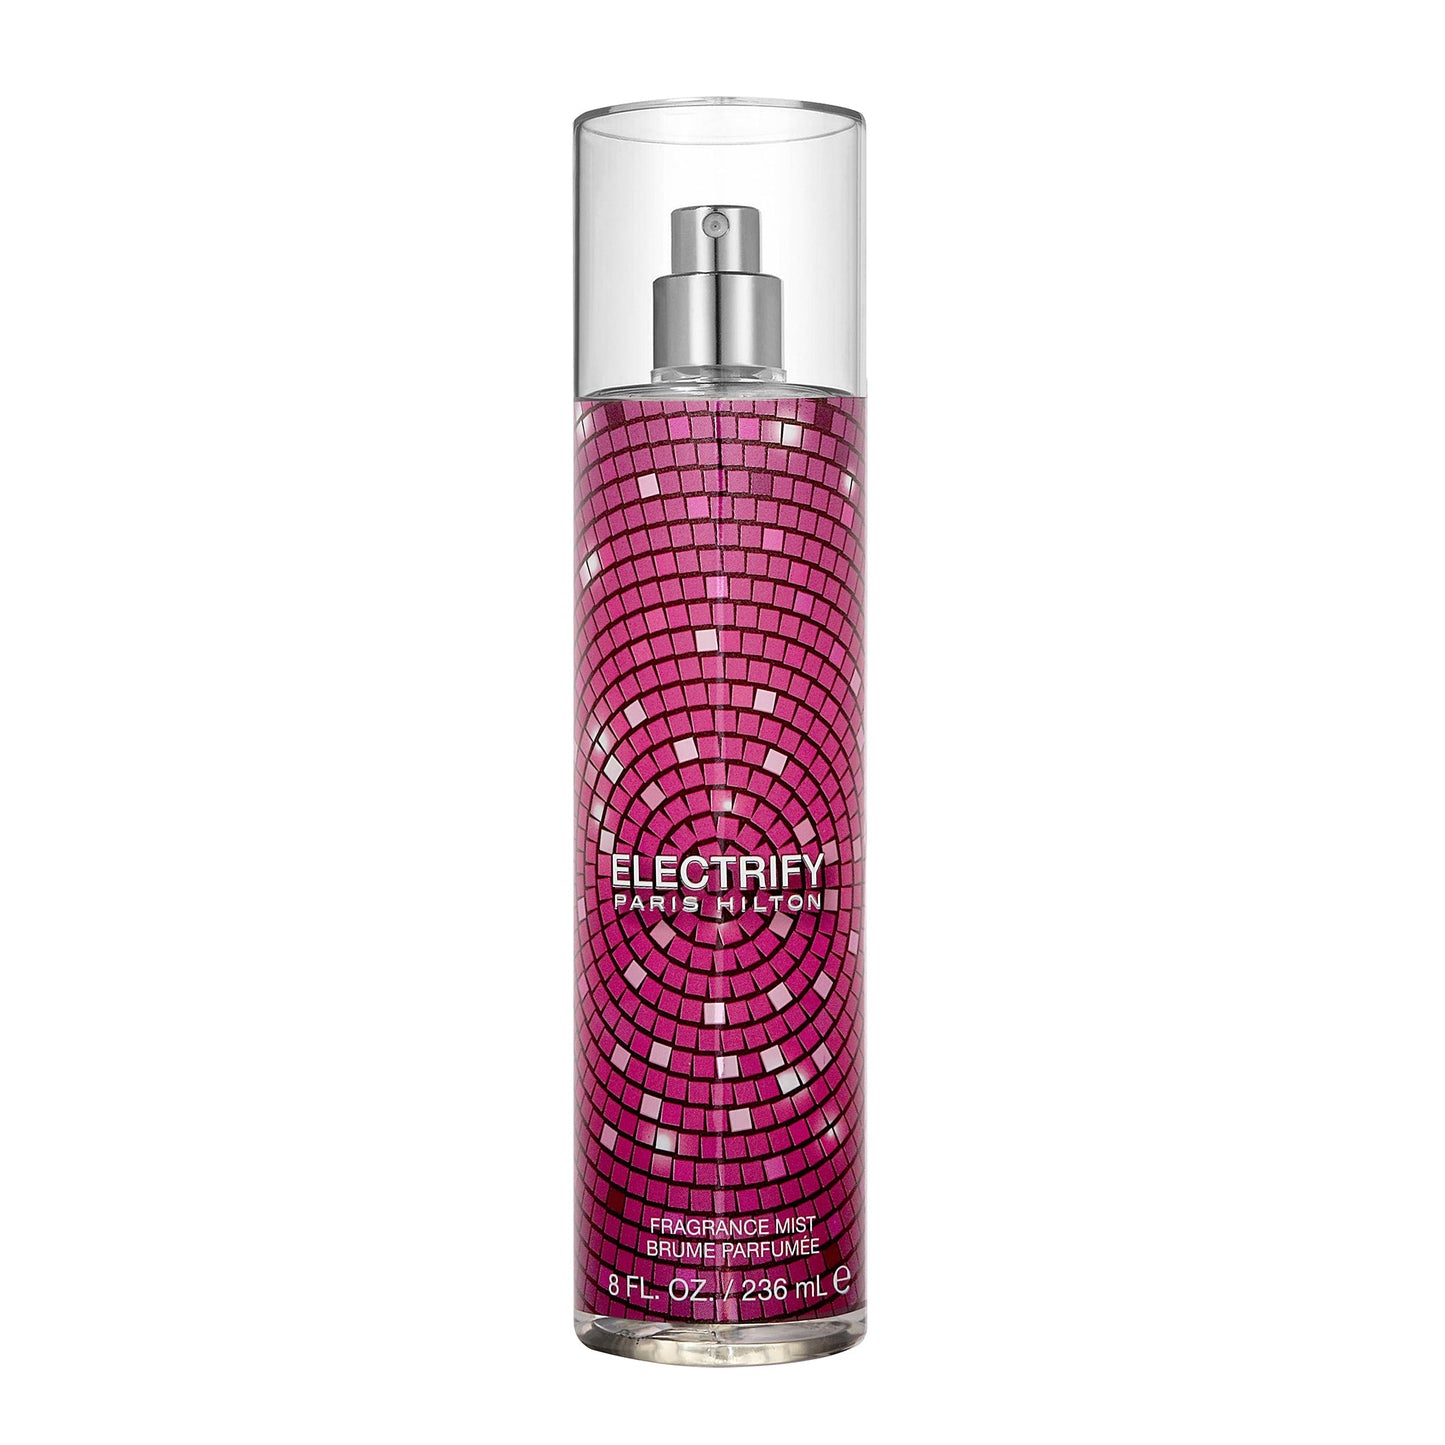 Electrify Body Spray 8oz by Paris Hilton Fragrances